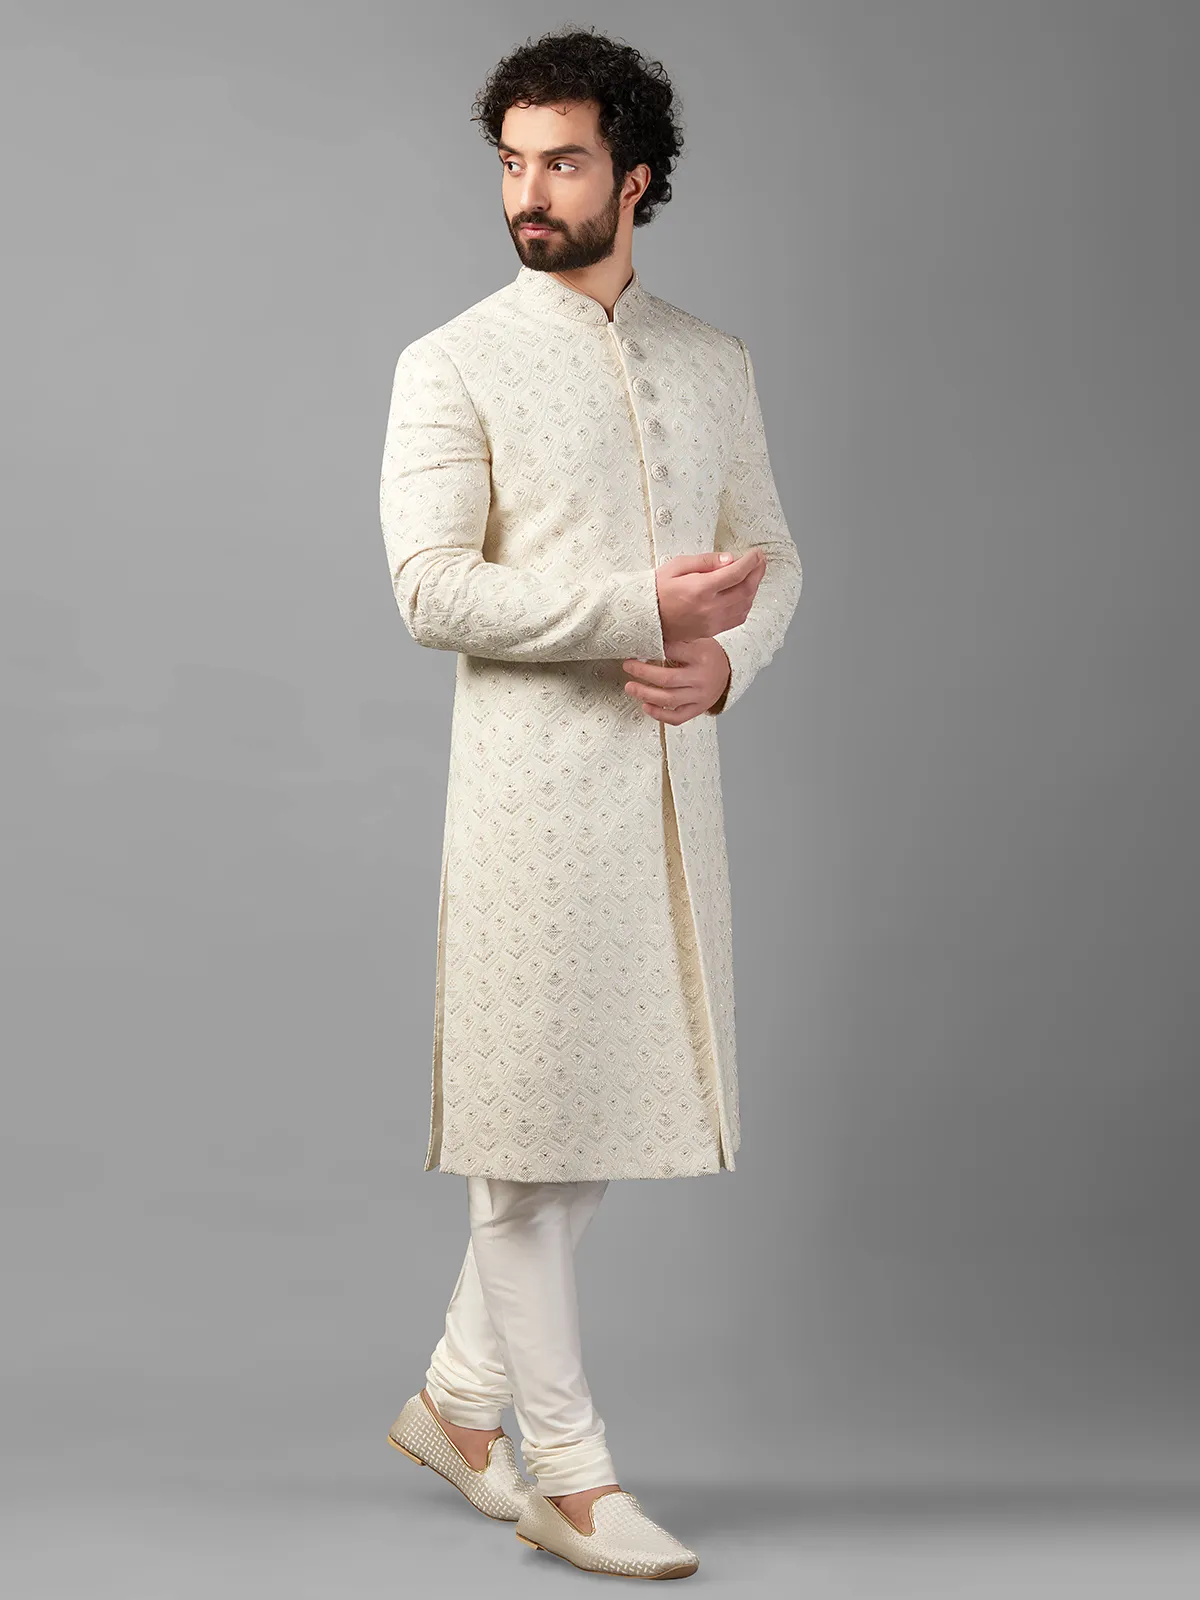 off-white silk sherwani for weddings